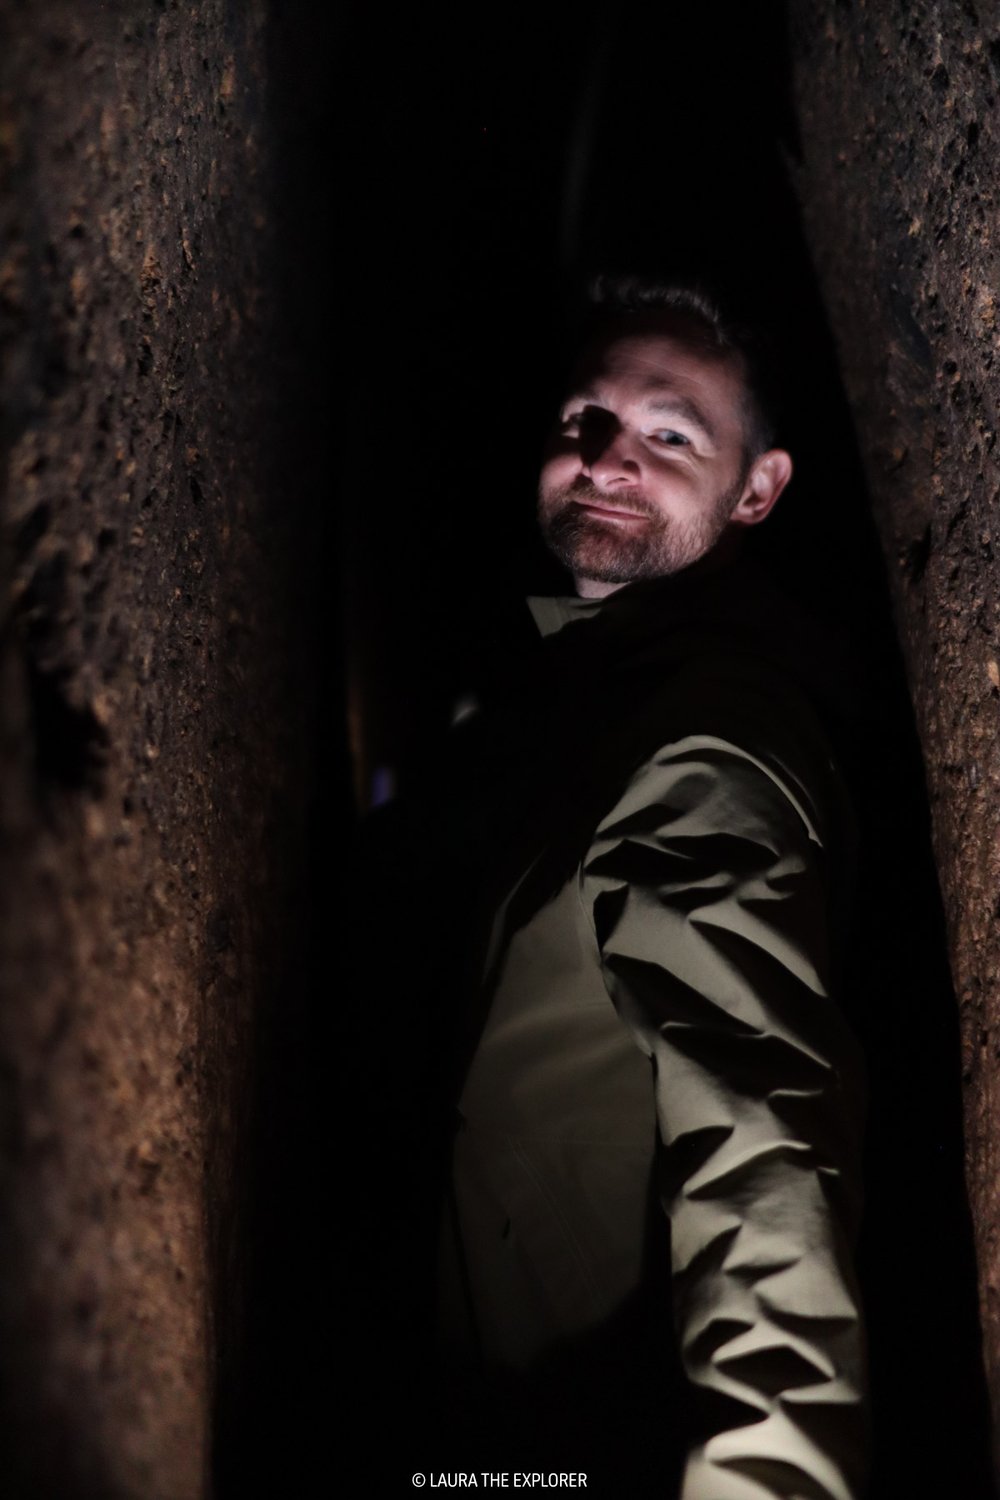 dan in the narrow tunnels of subterranean naples